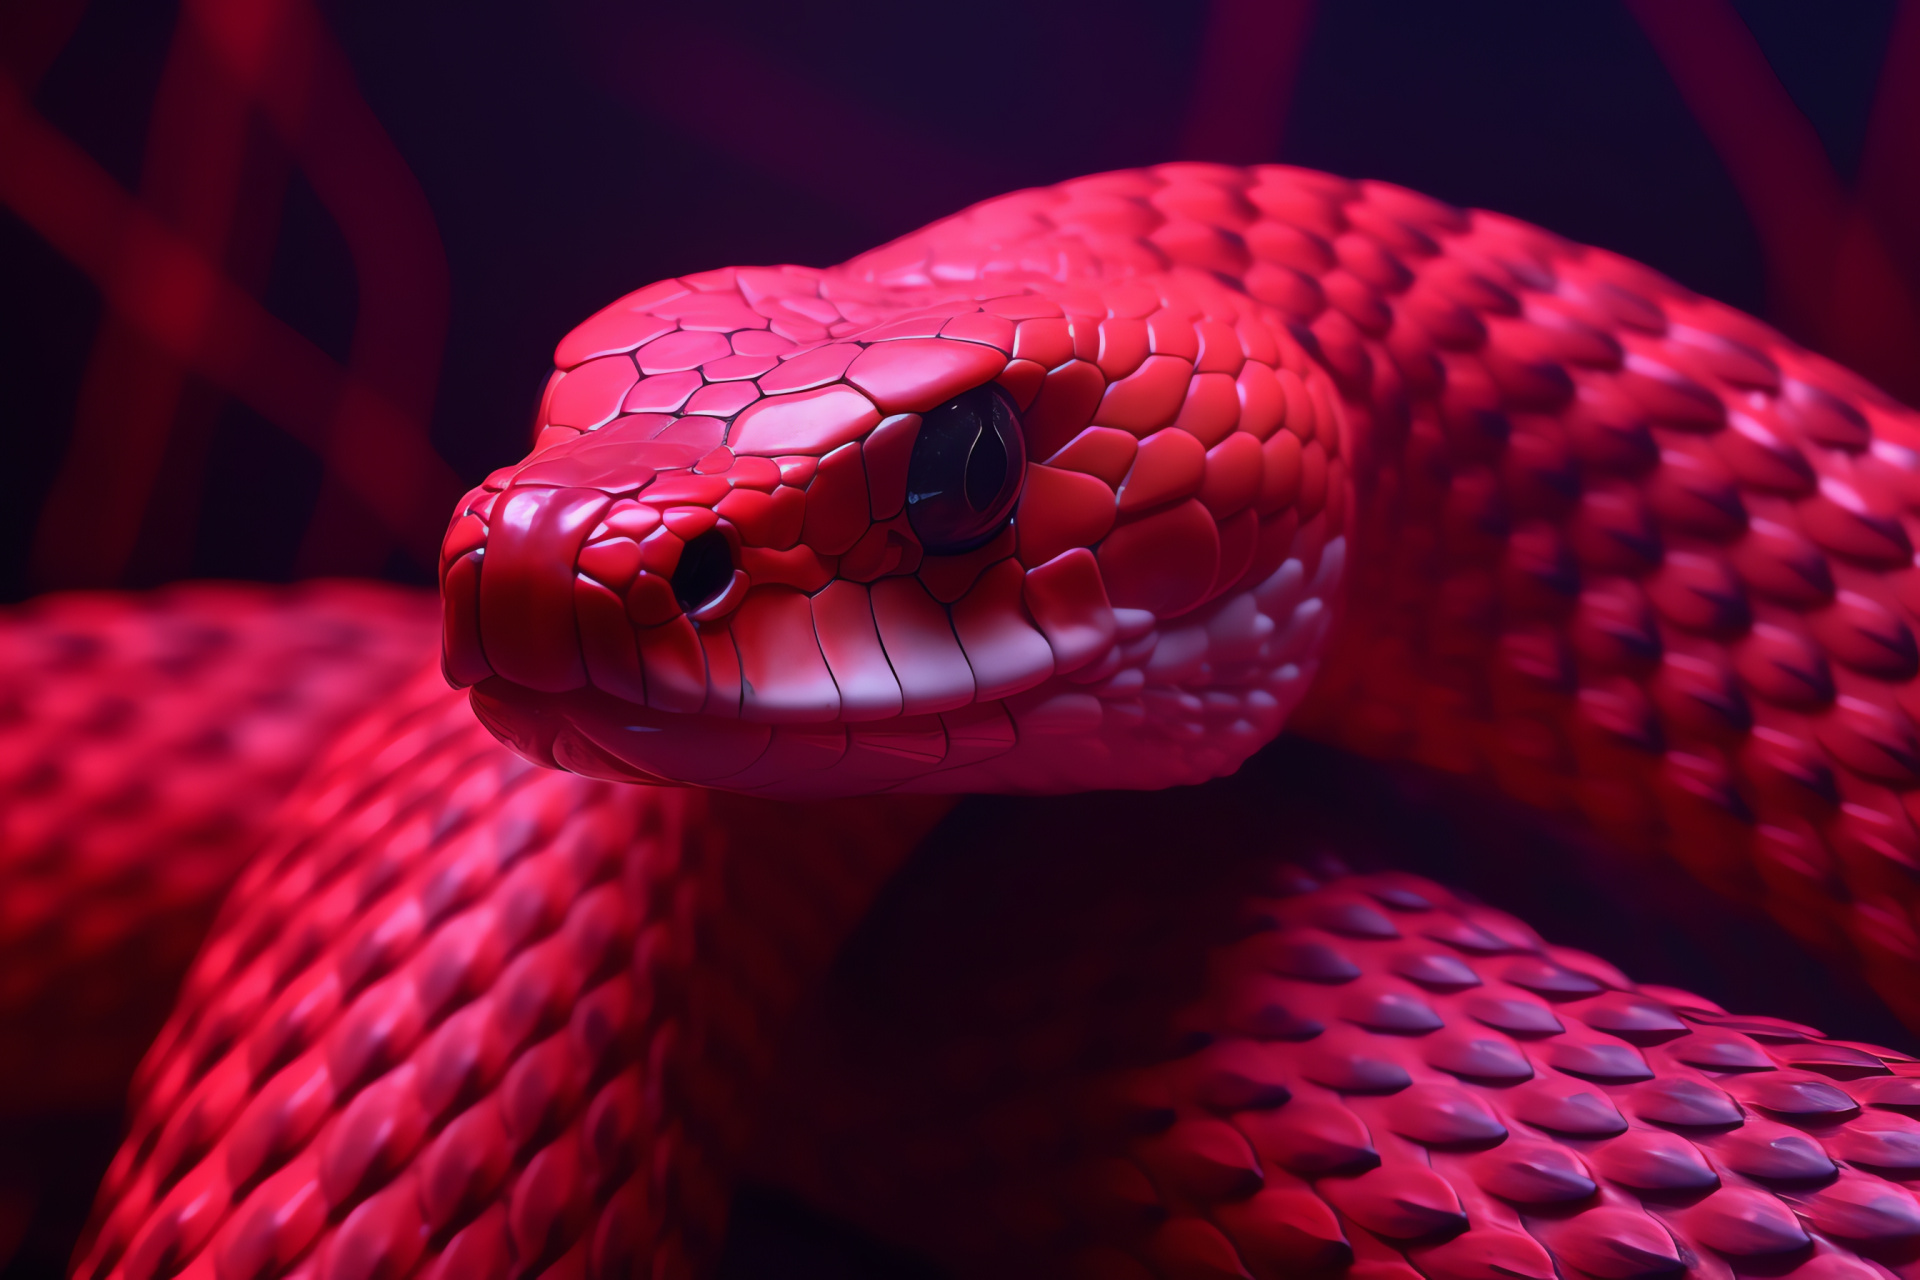 Serpentine creature, fluorescent pink reptile, intense crimson, striking vividness, minimalistic setting, HD Desktop Wallpaper